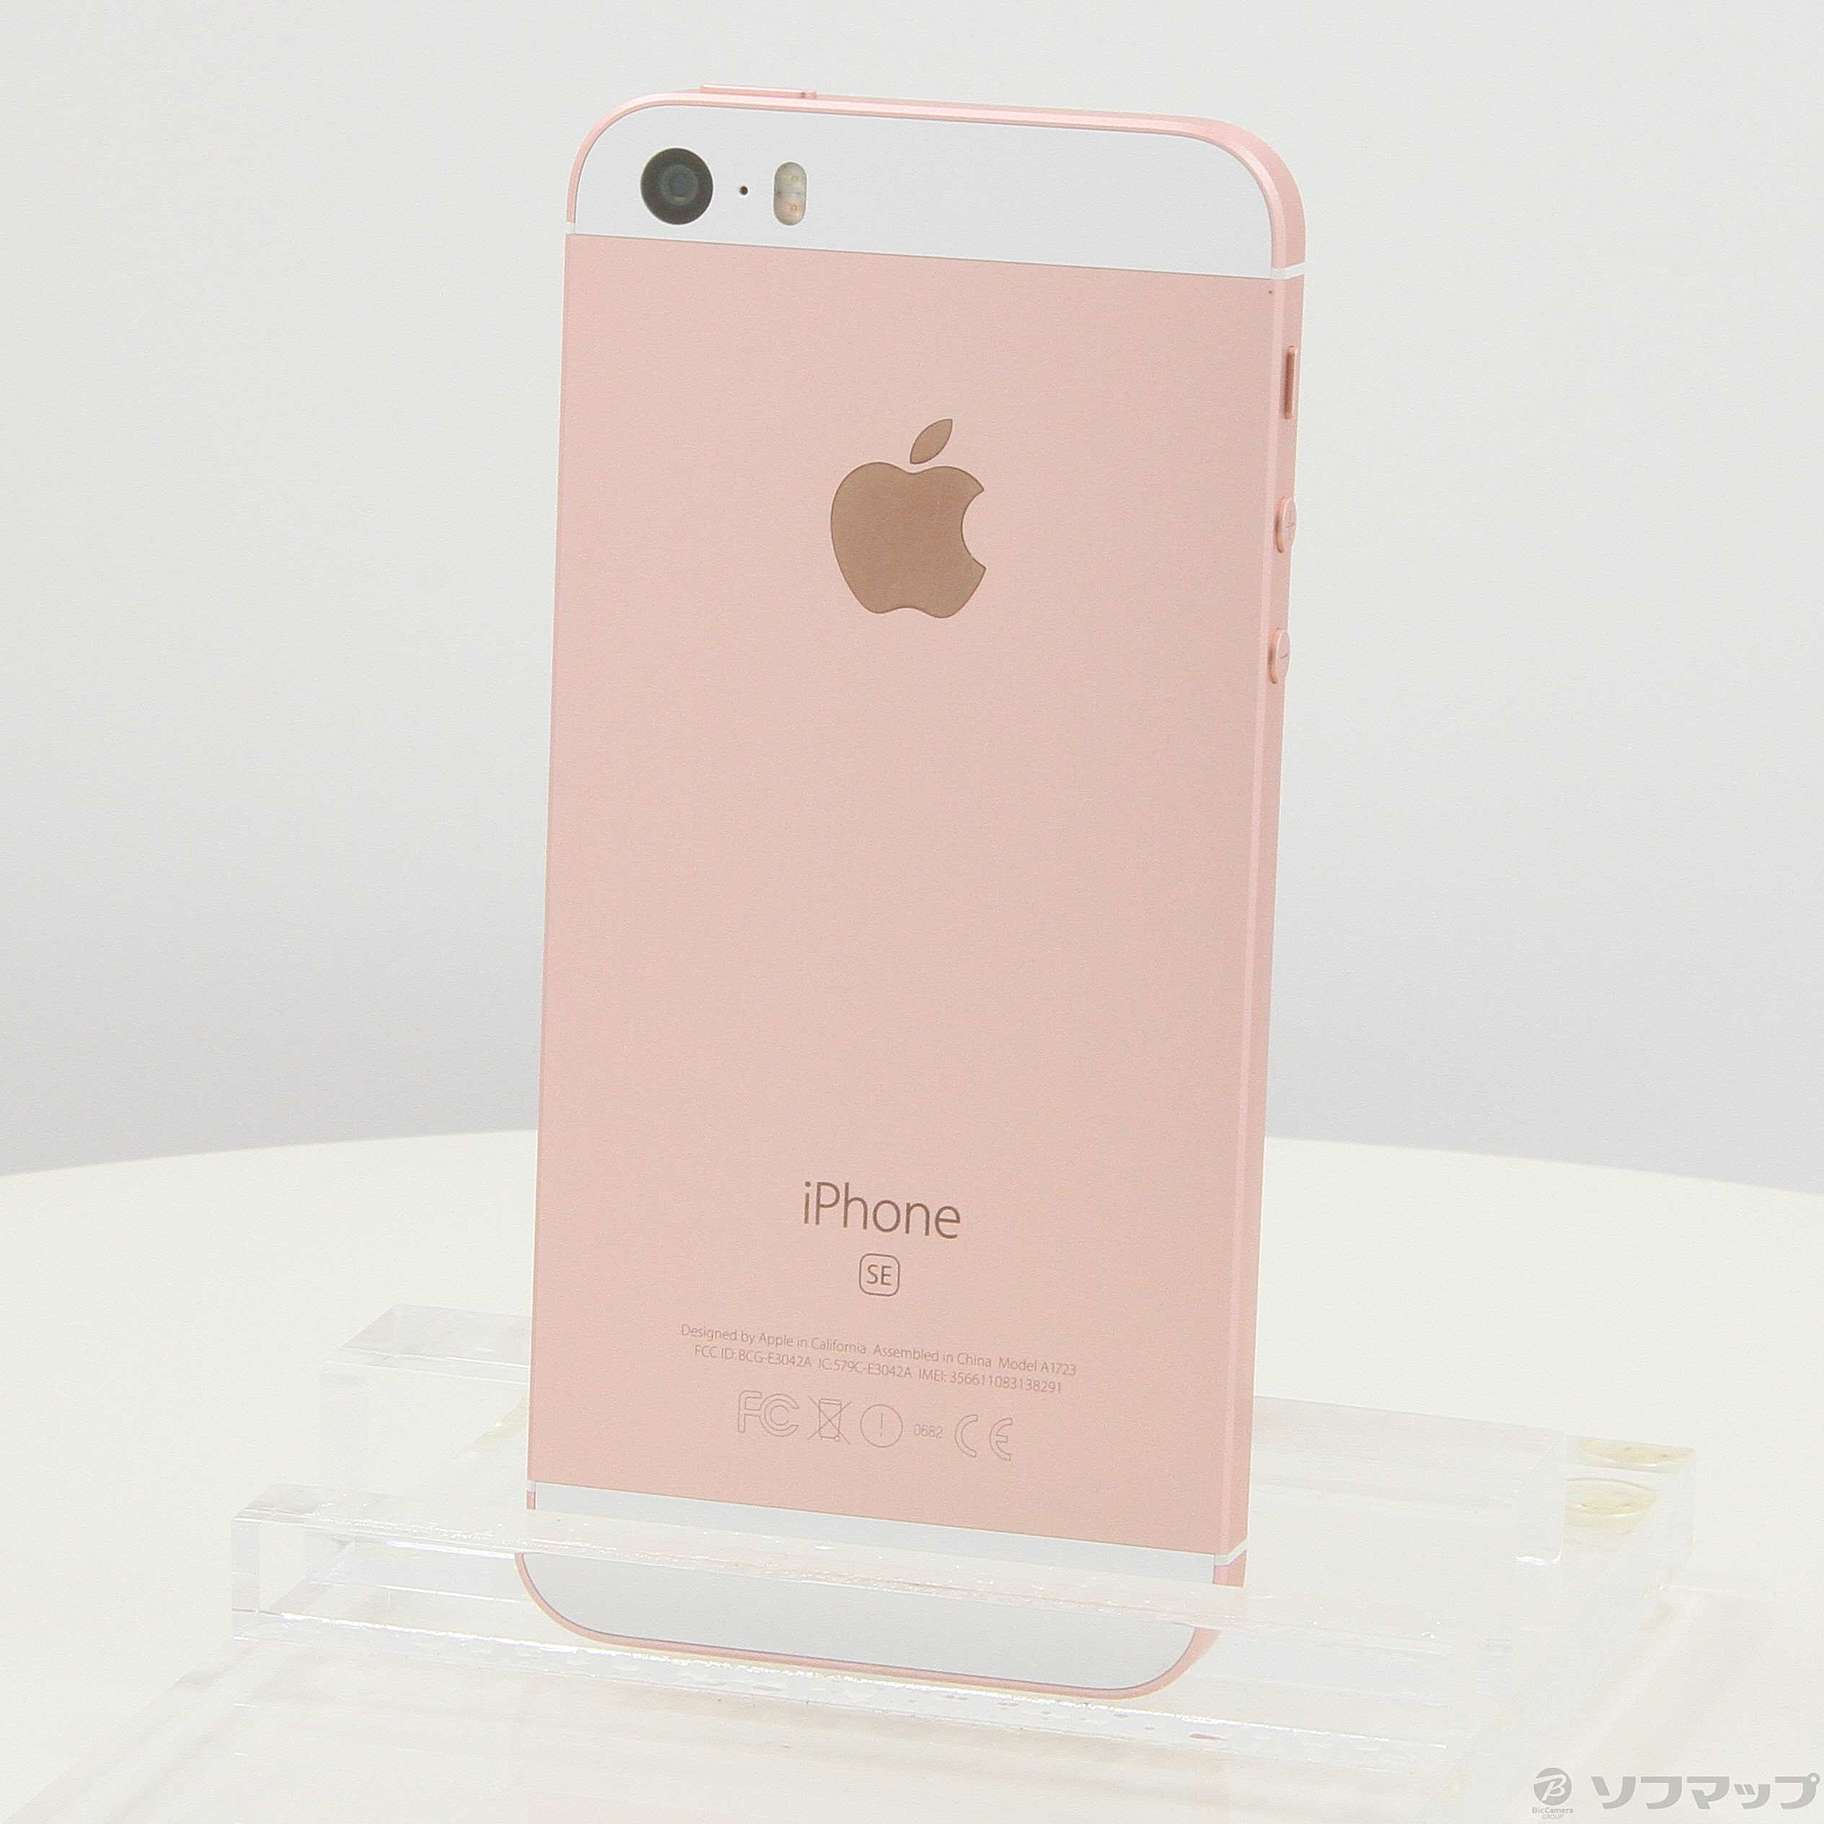 iPhone se 32GB simフリー Rose gold-